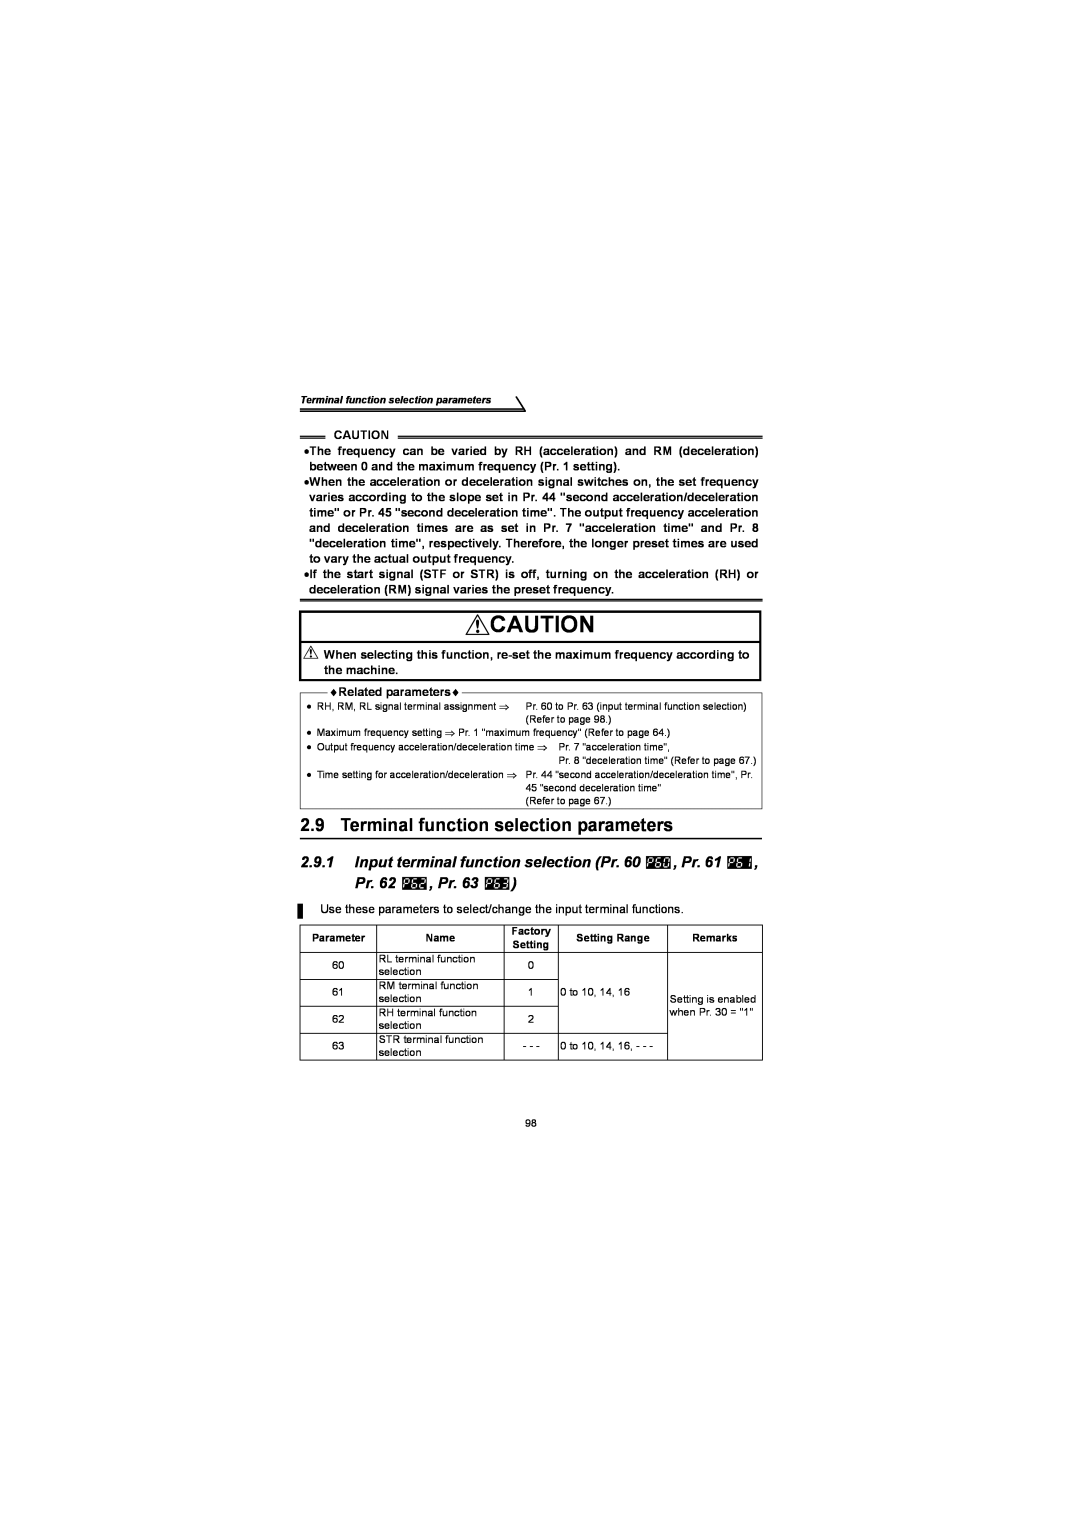 Mitsubishi Electronics FR-S500 instruction manual Terminal function selection parameters 